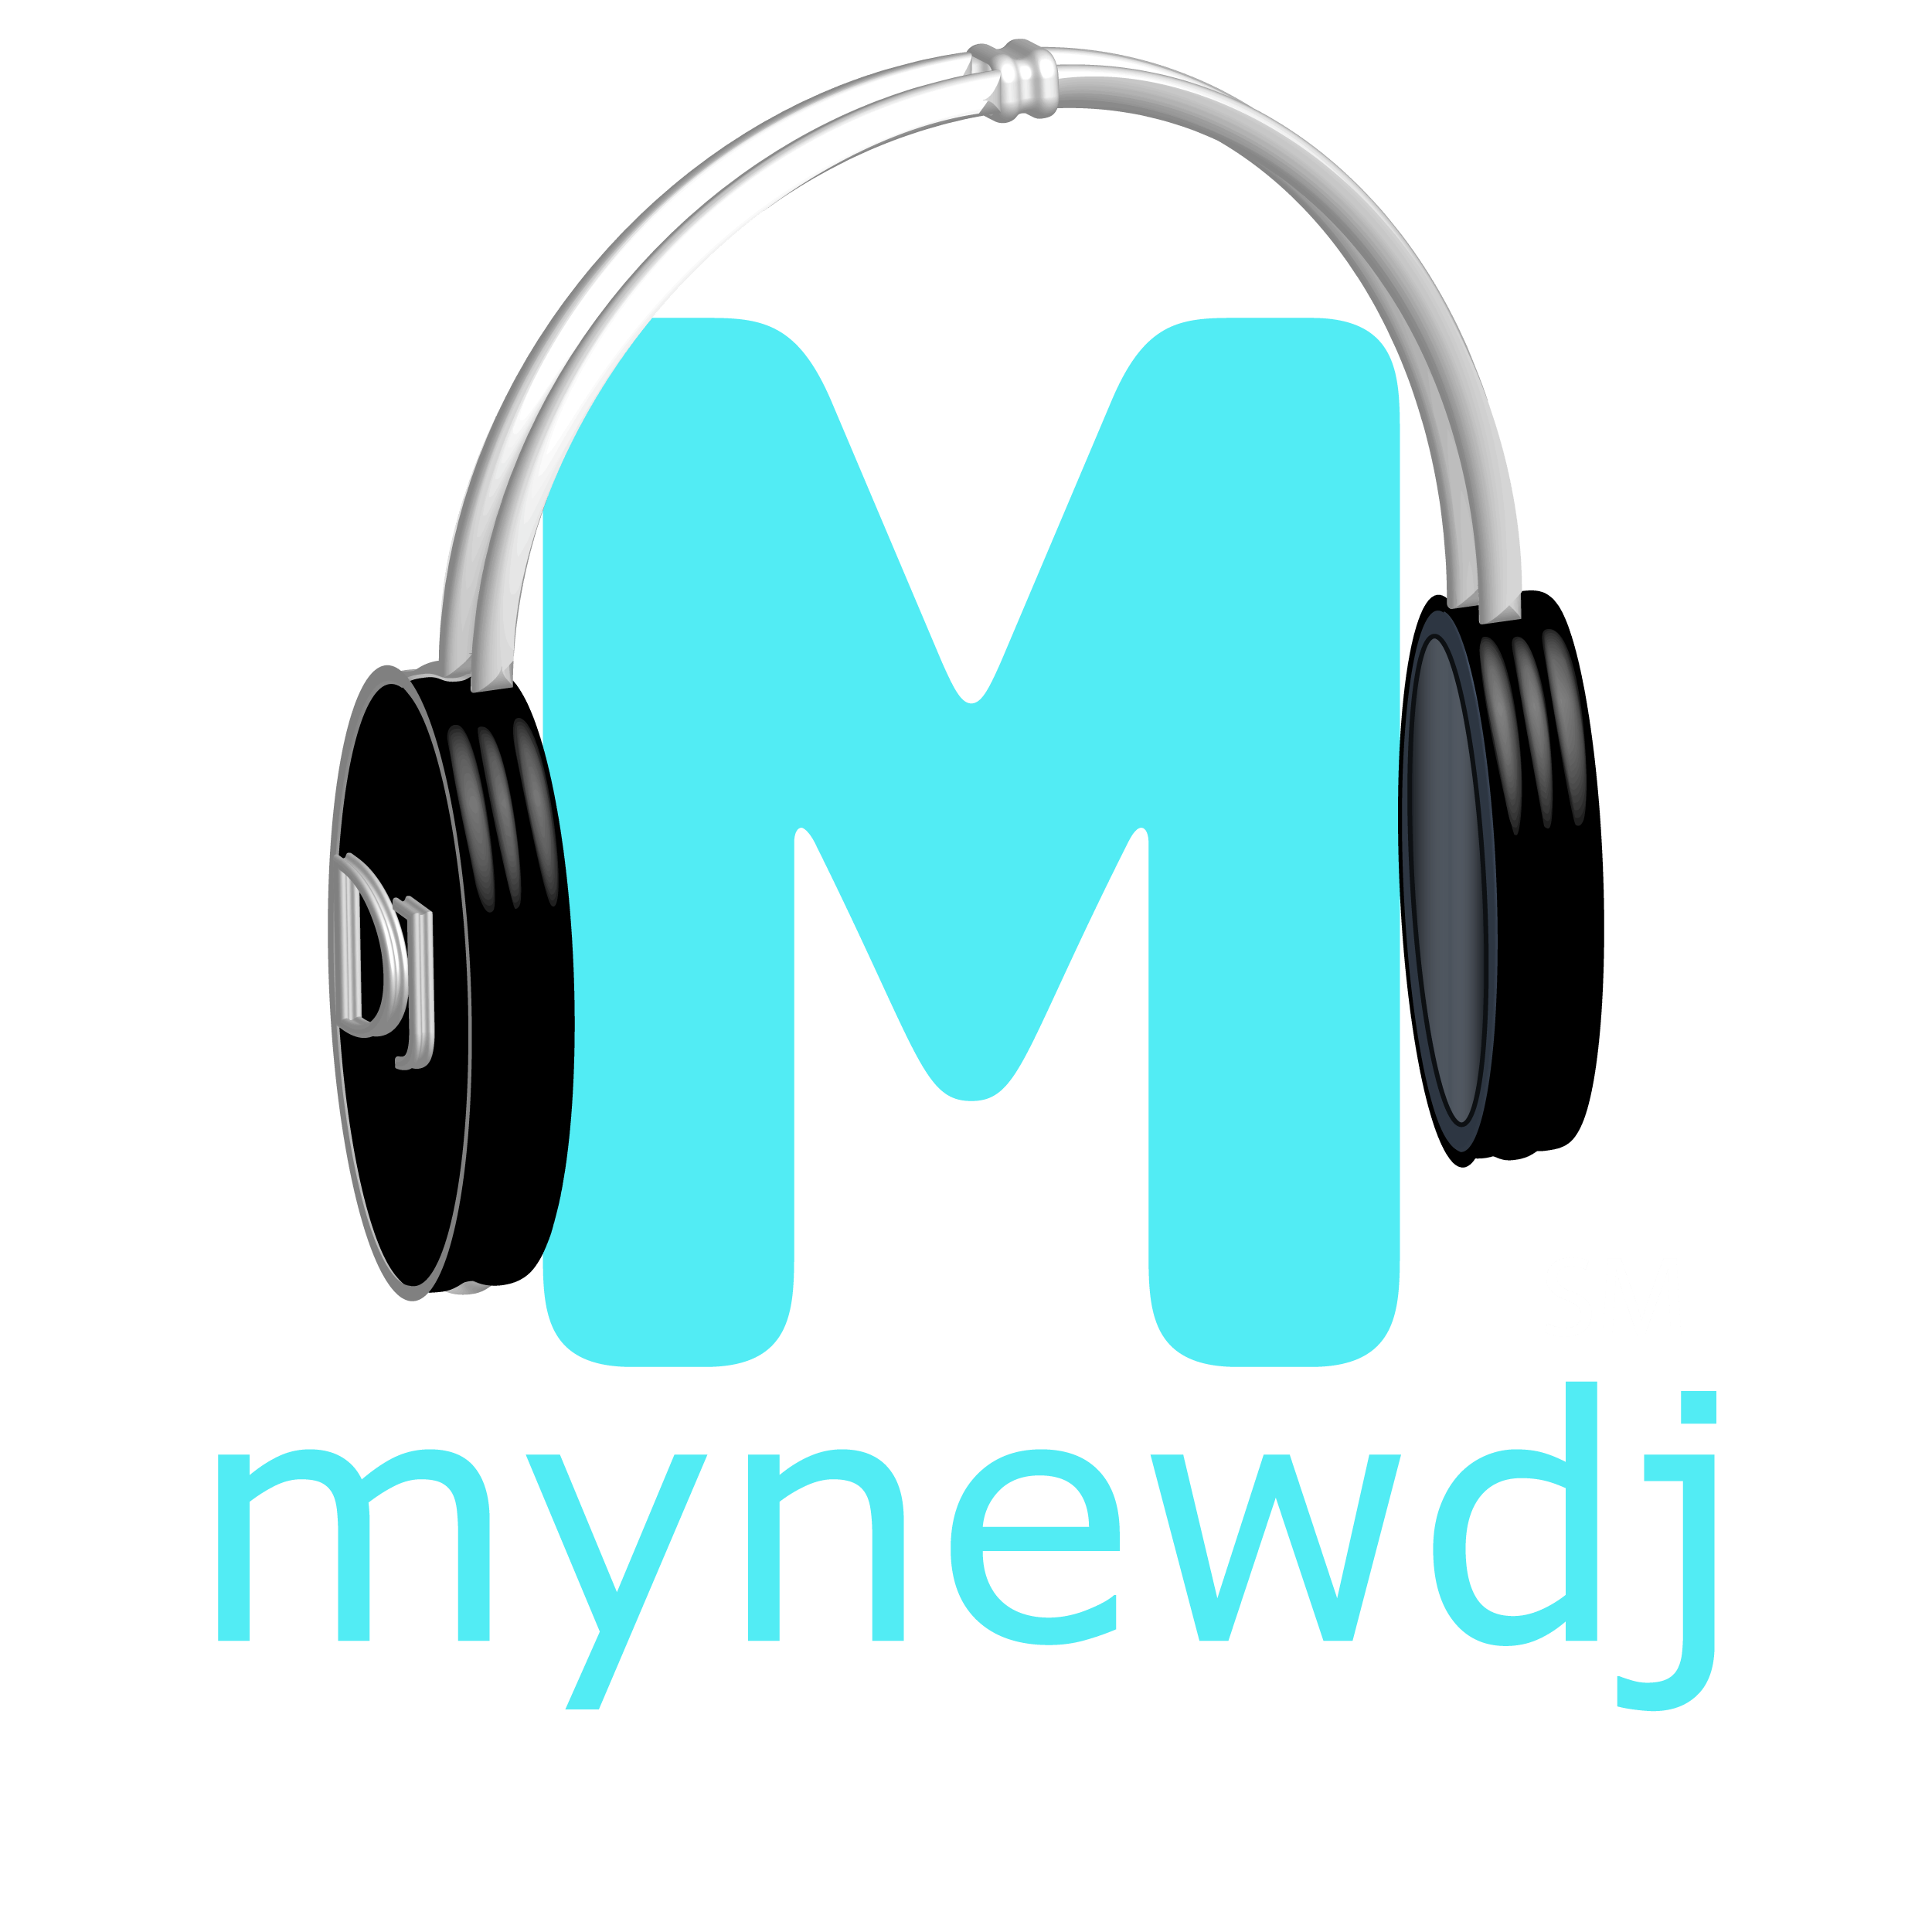 The mynewdj logo